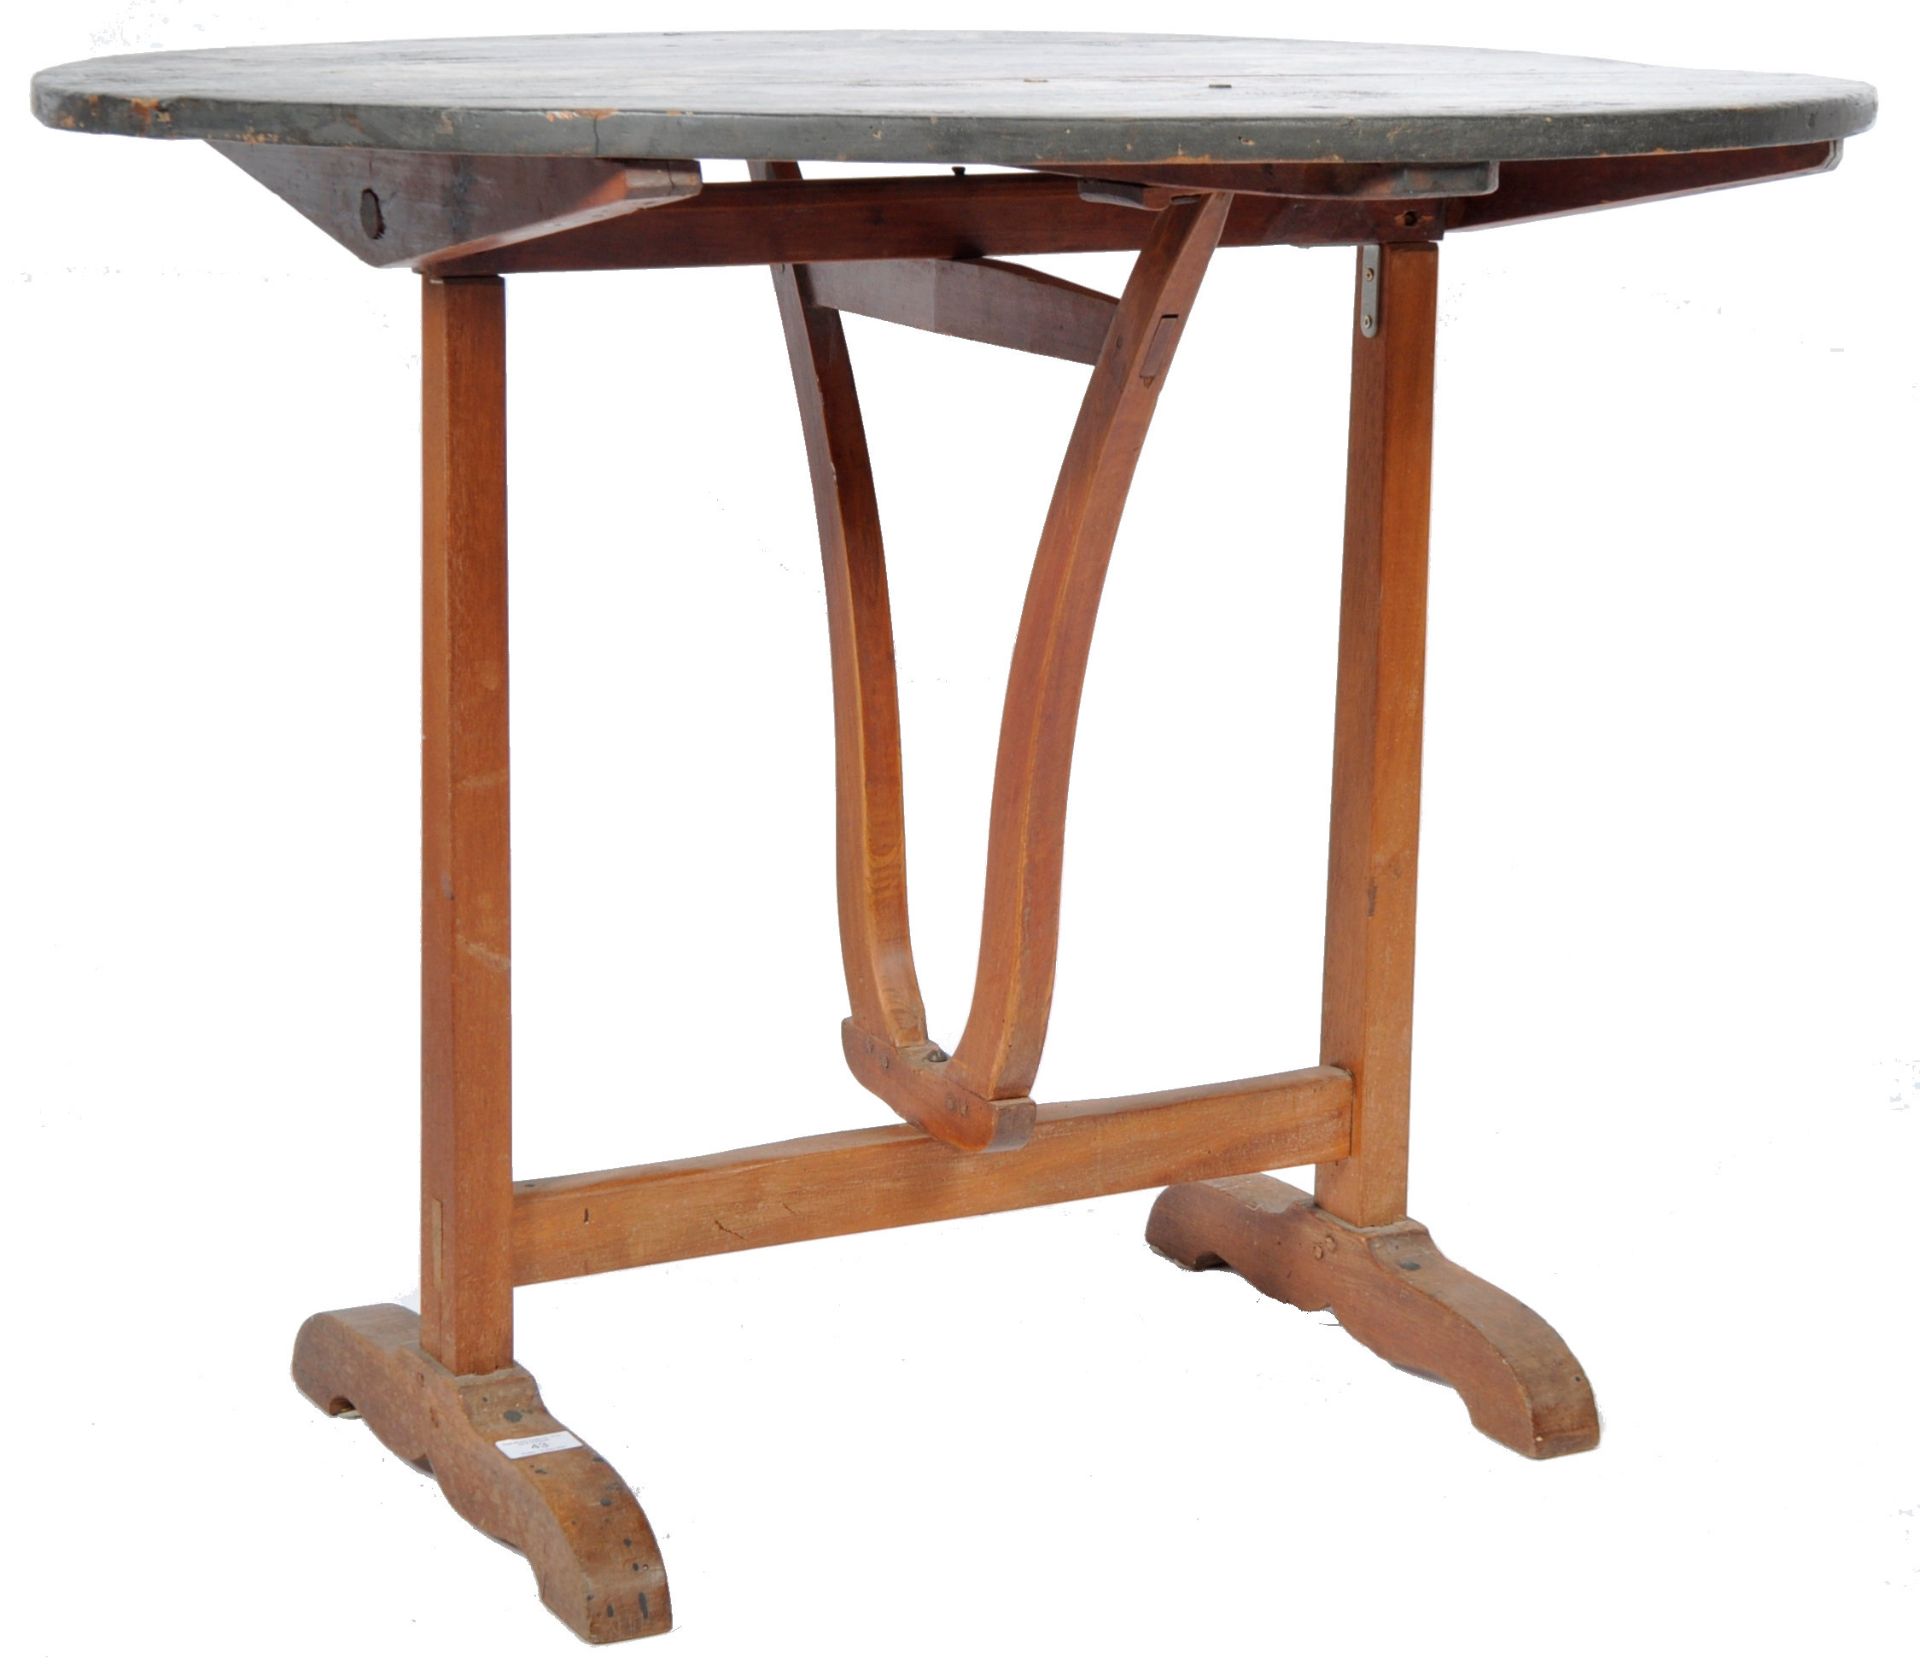 ANTIQUE 19TH CENTURY FRENCH PAINTED VENDANGE TABLE TABLE DE VIGNERON - Image 2 of 9